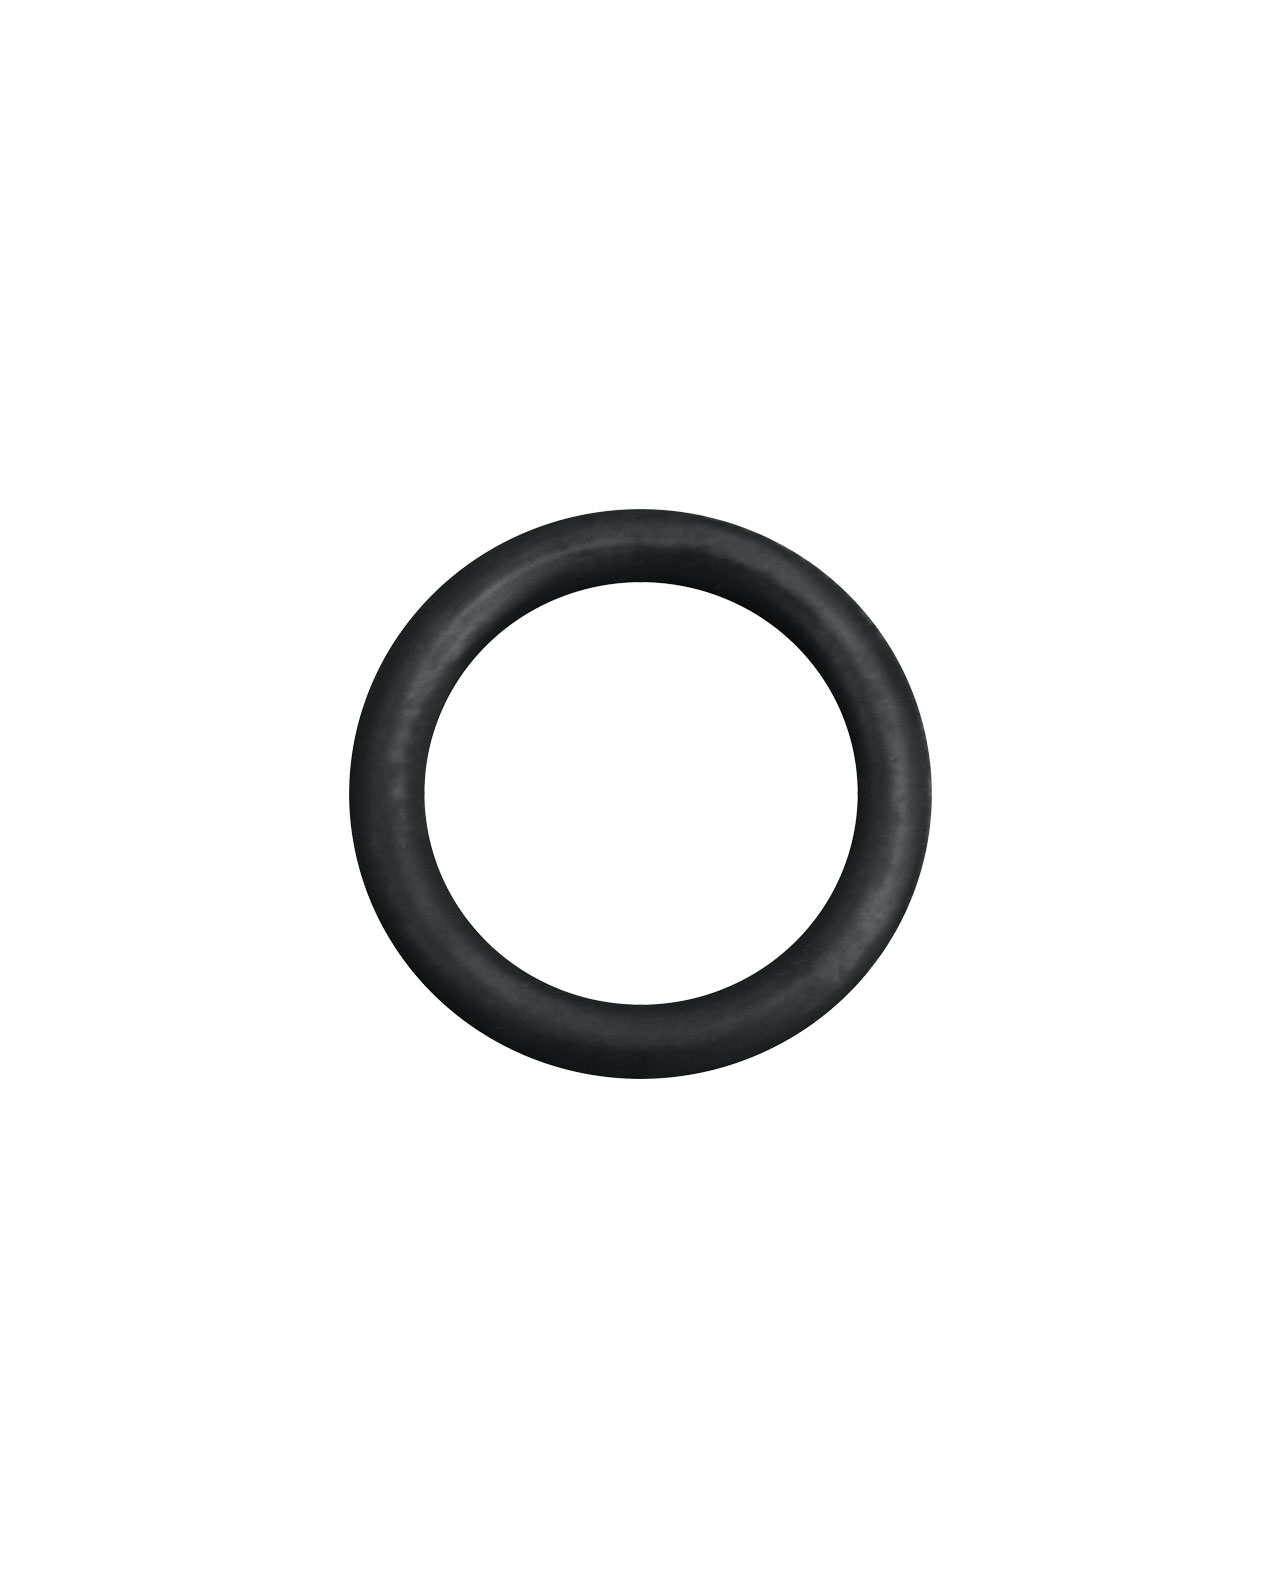 O-Ring (Part #: 20J006)